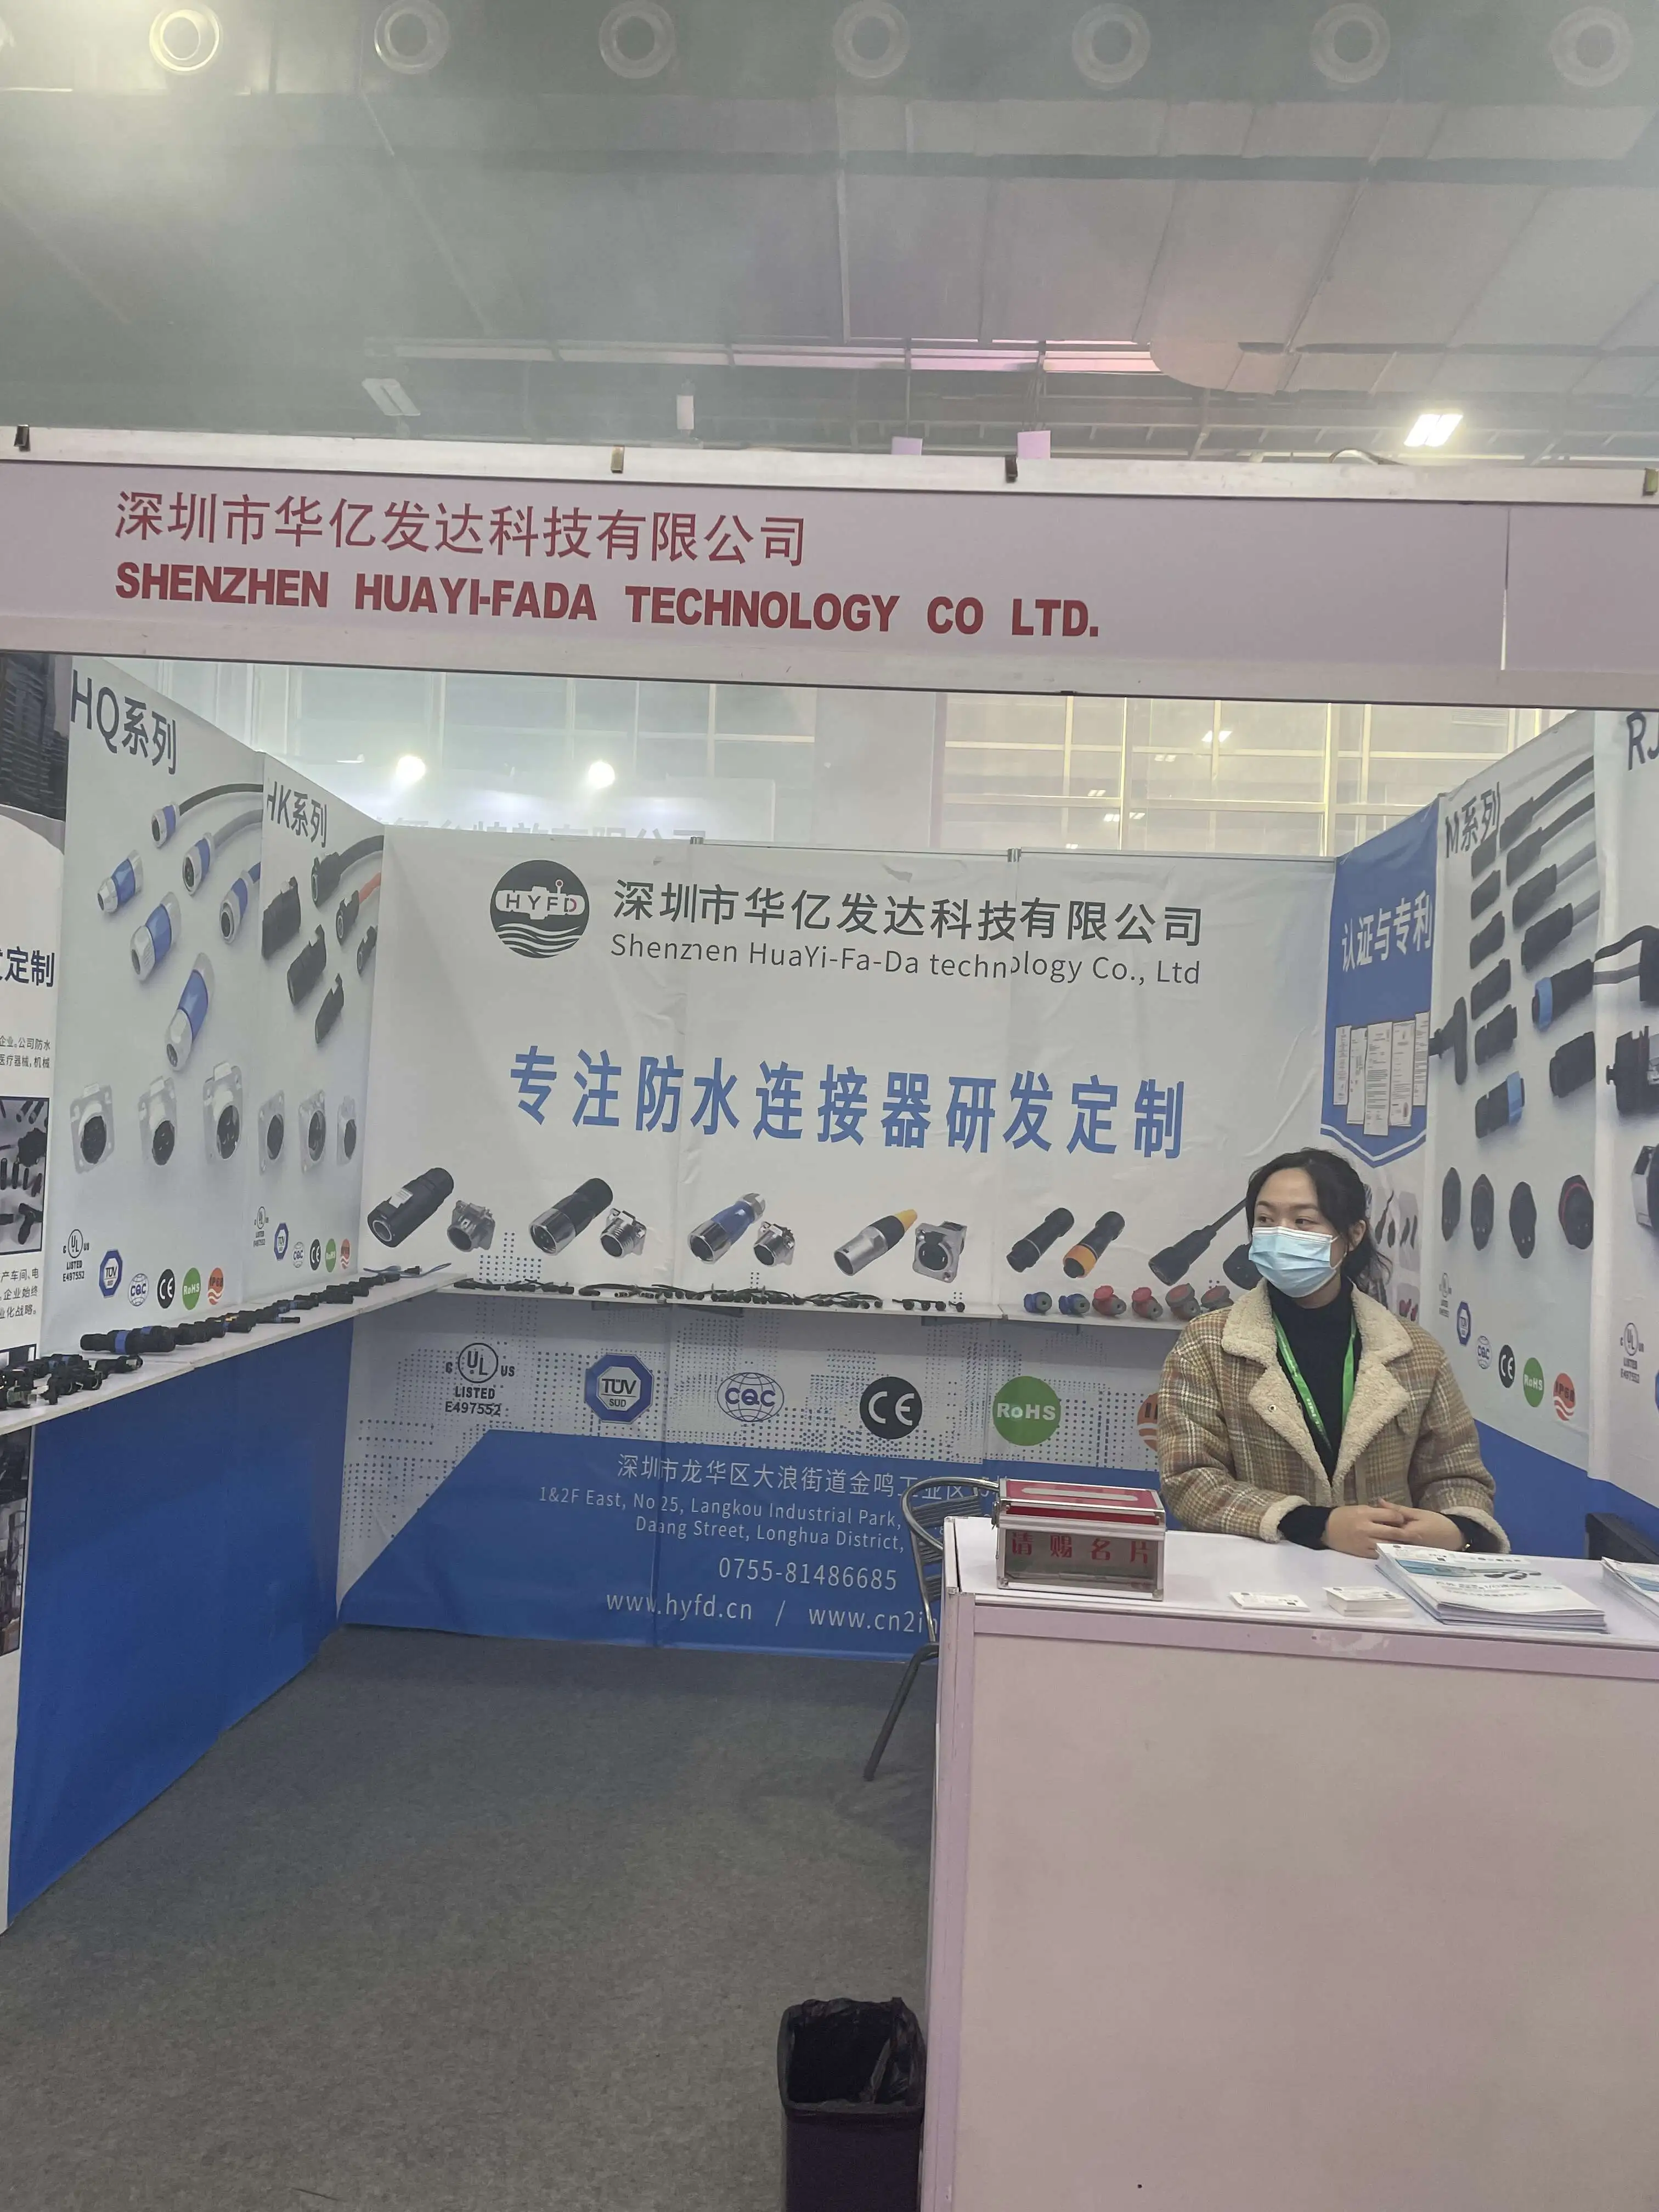 ShenZhen HuaYi-FaDa Technology CO., Ltd. participated in the Lighting Fair